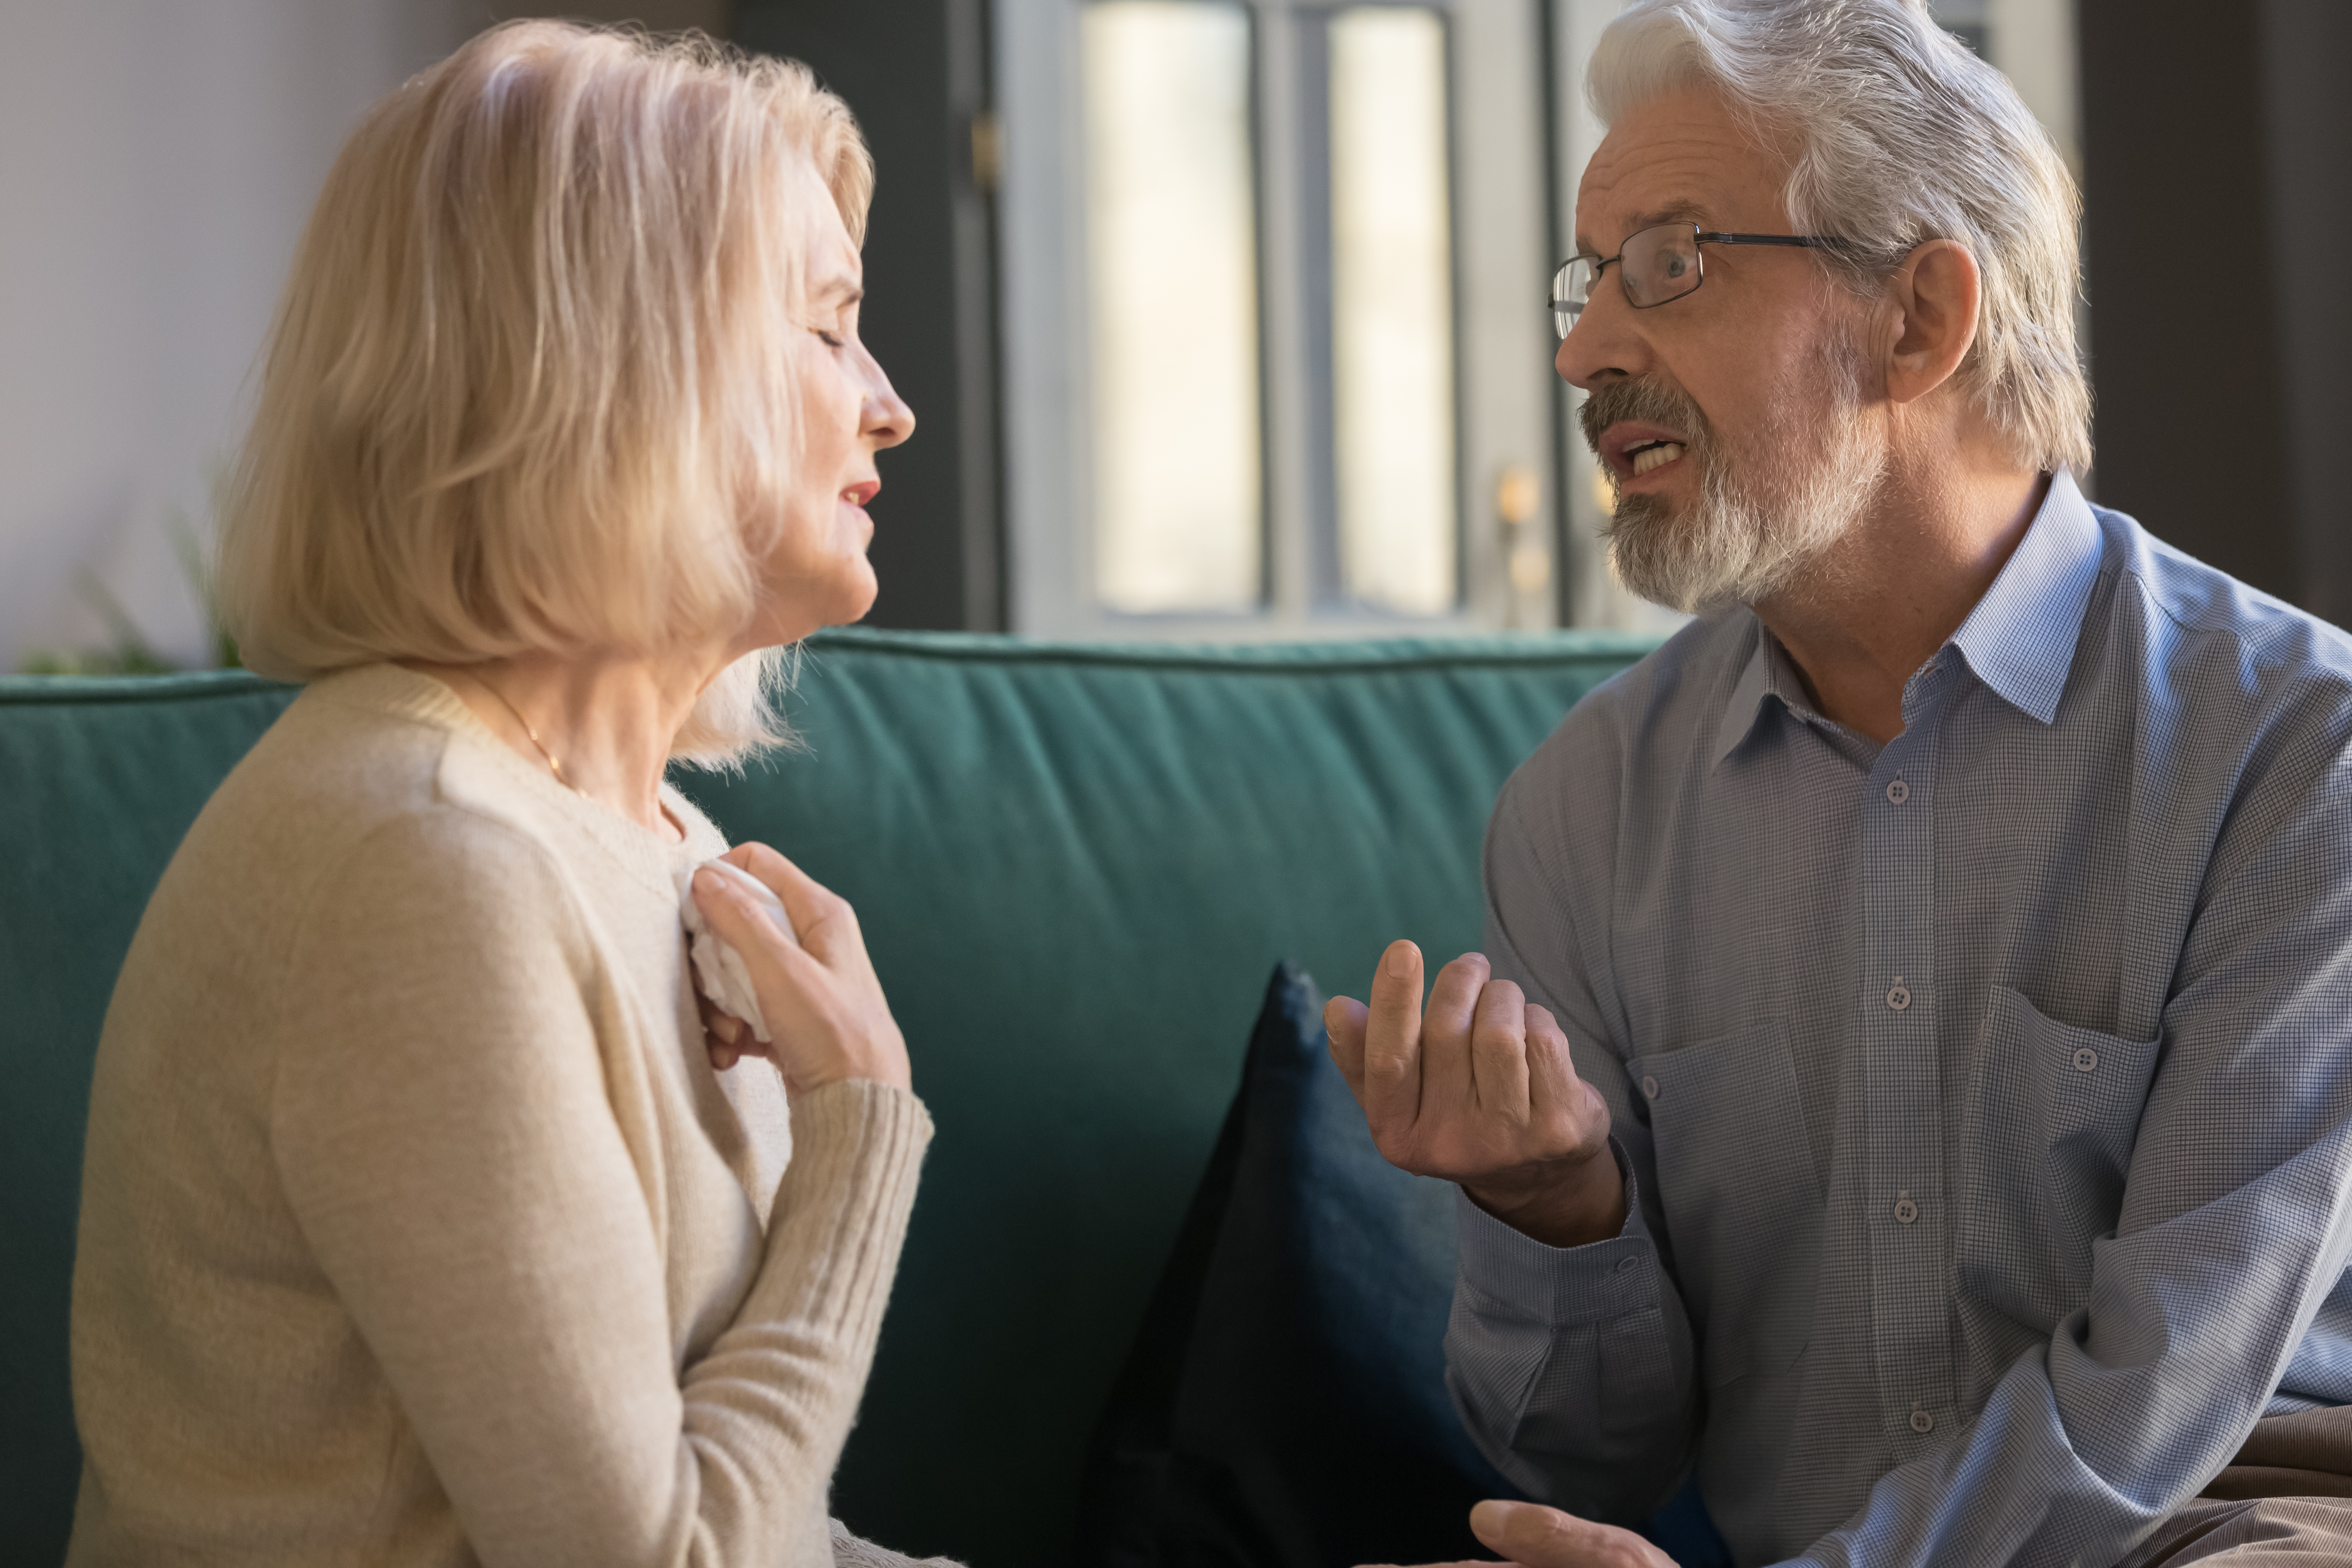 A senior couple arguing | Source: Shutterstock